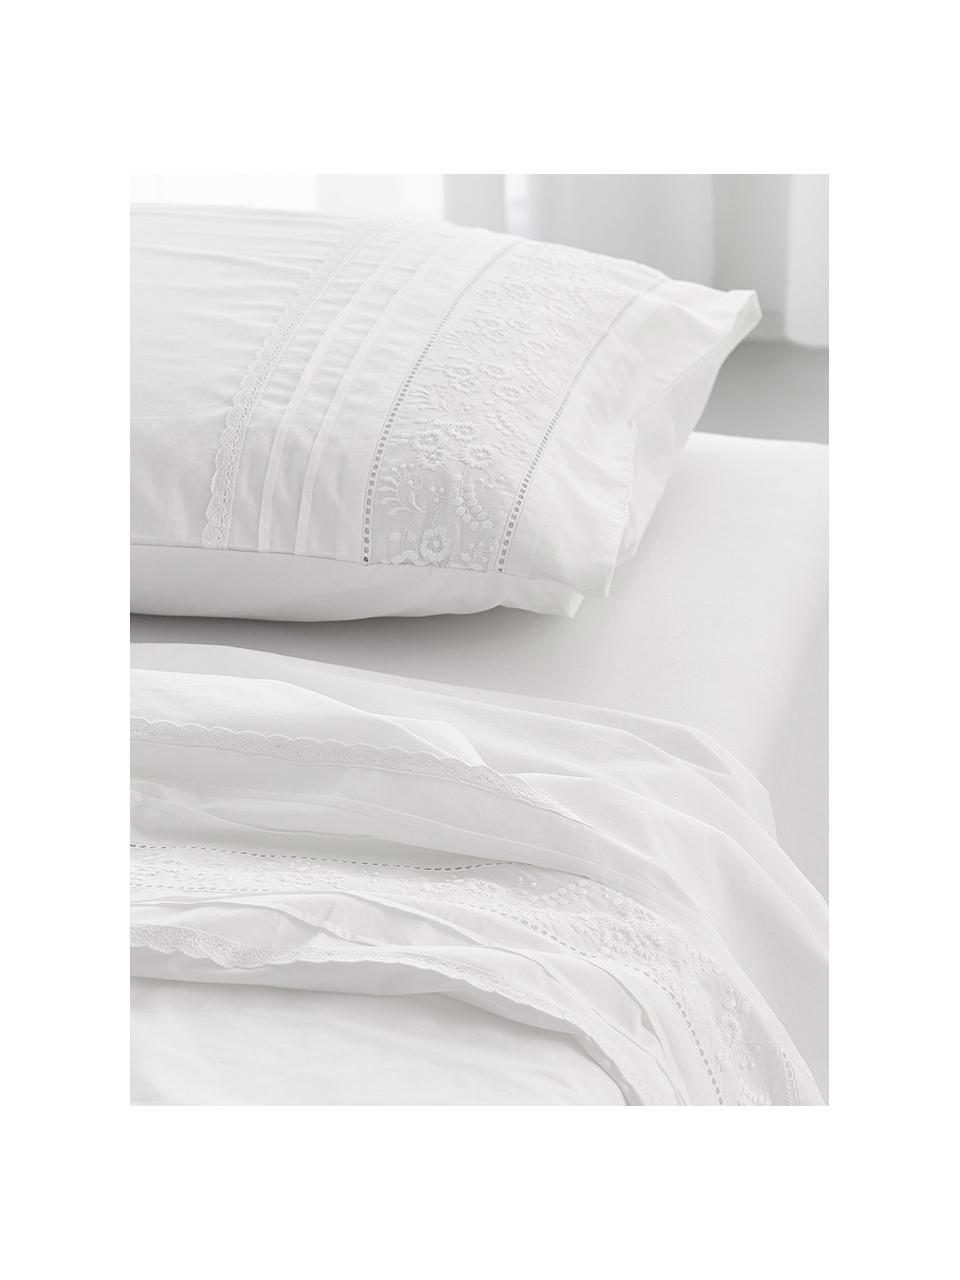 Baumwollperkal-Bettwäsche Avery in Weiß mit Stickerei, Webart: Perkal Fadendichte 200 TC, Weiß, 200 x 200 cm + 2 Kissen 80 x 80 cm